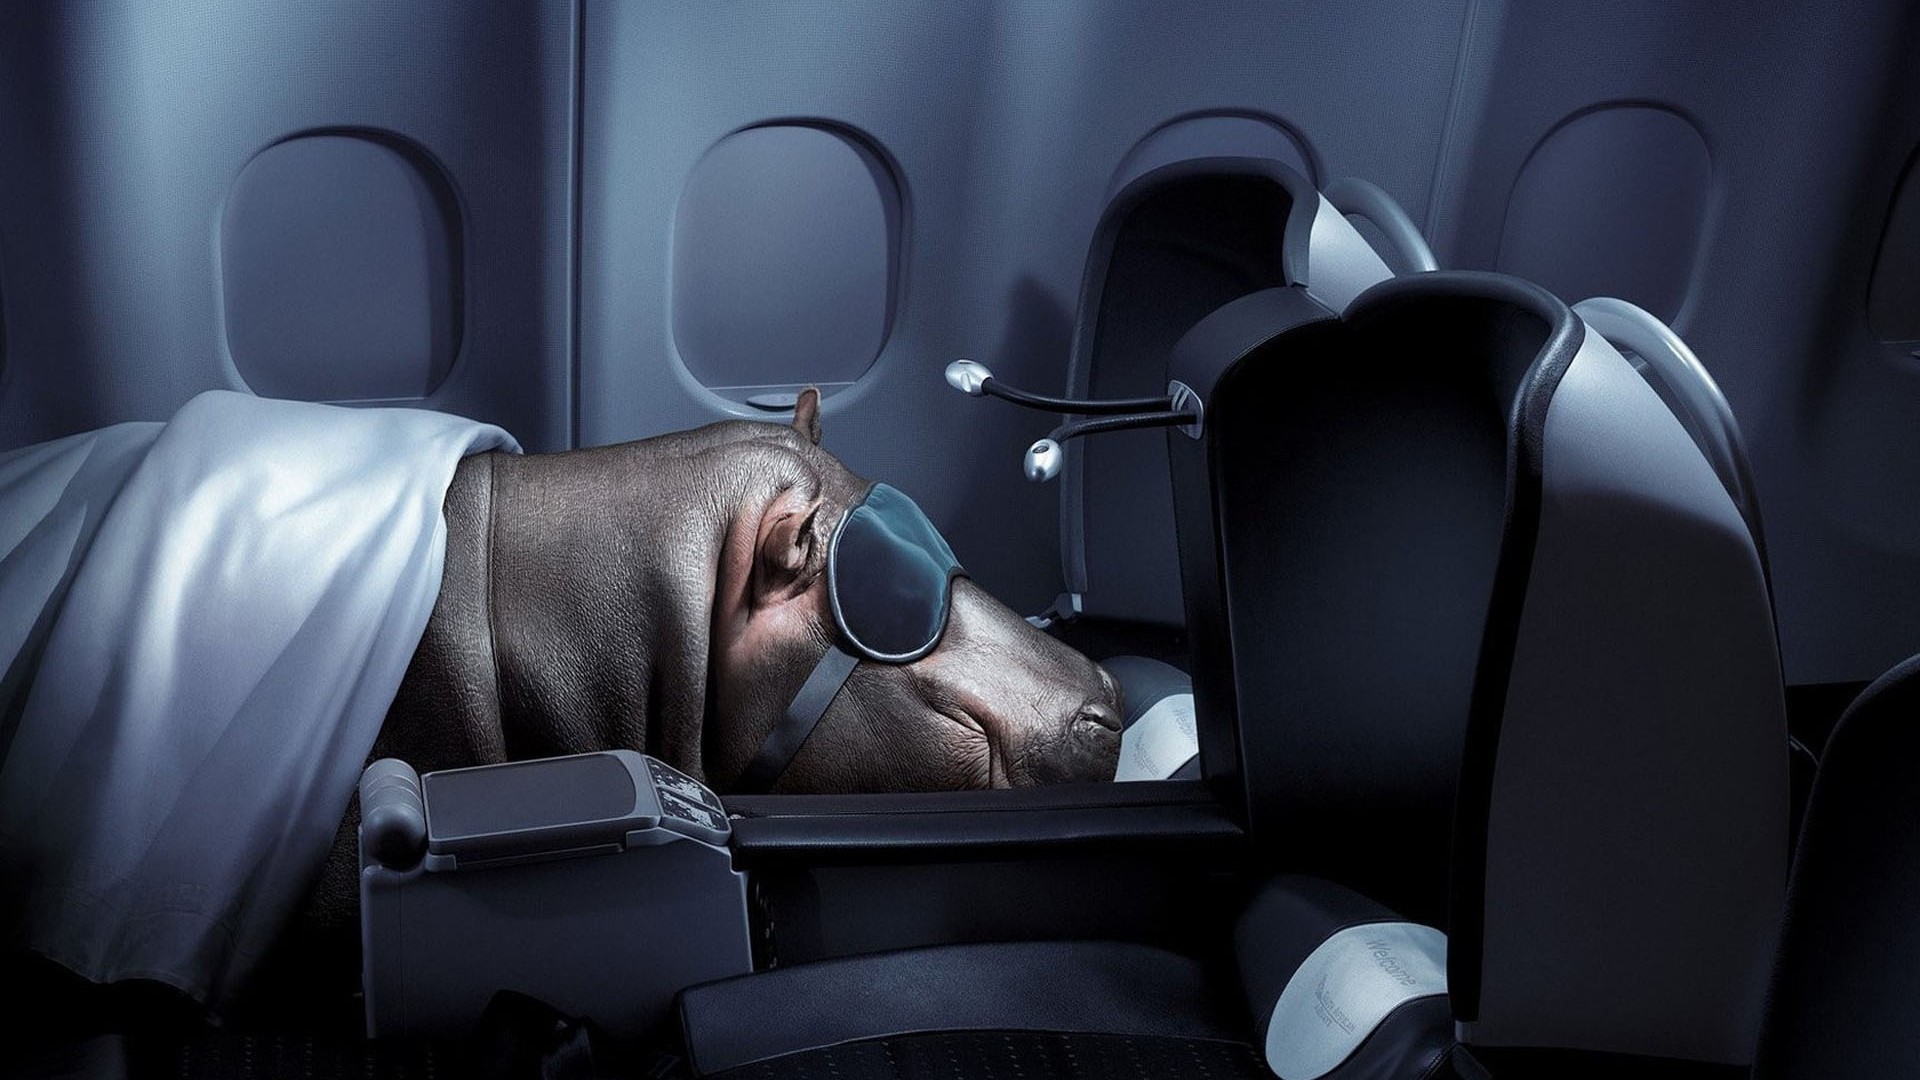 Hippos Interior Humor Digital Art Airplane Sleeping Chair 1920x1080